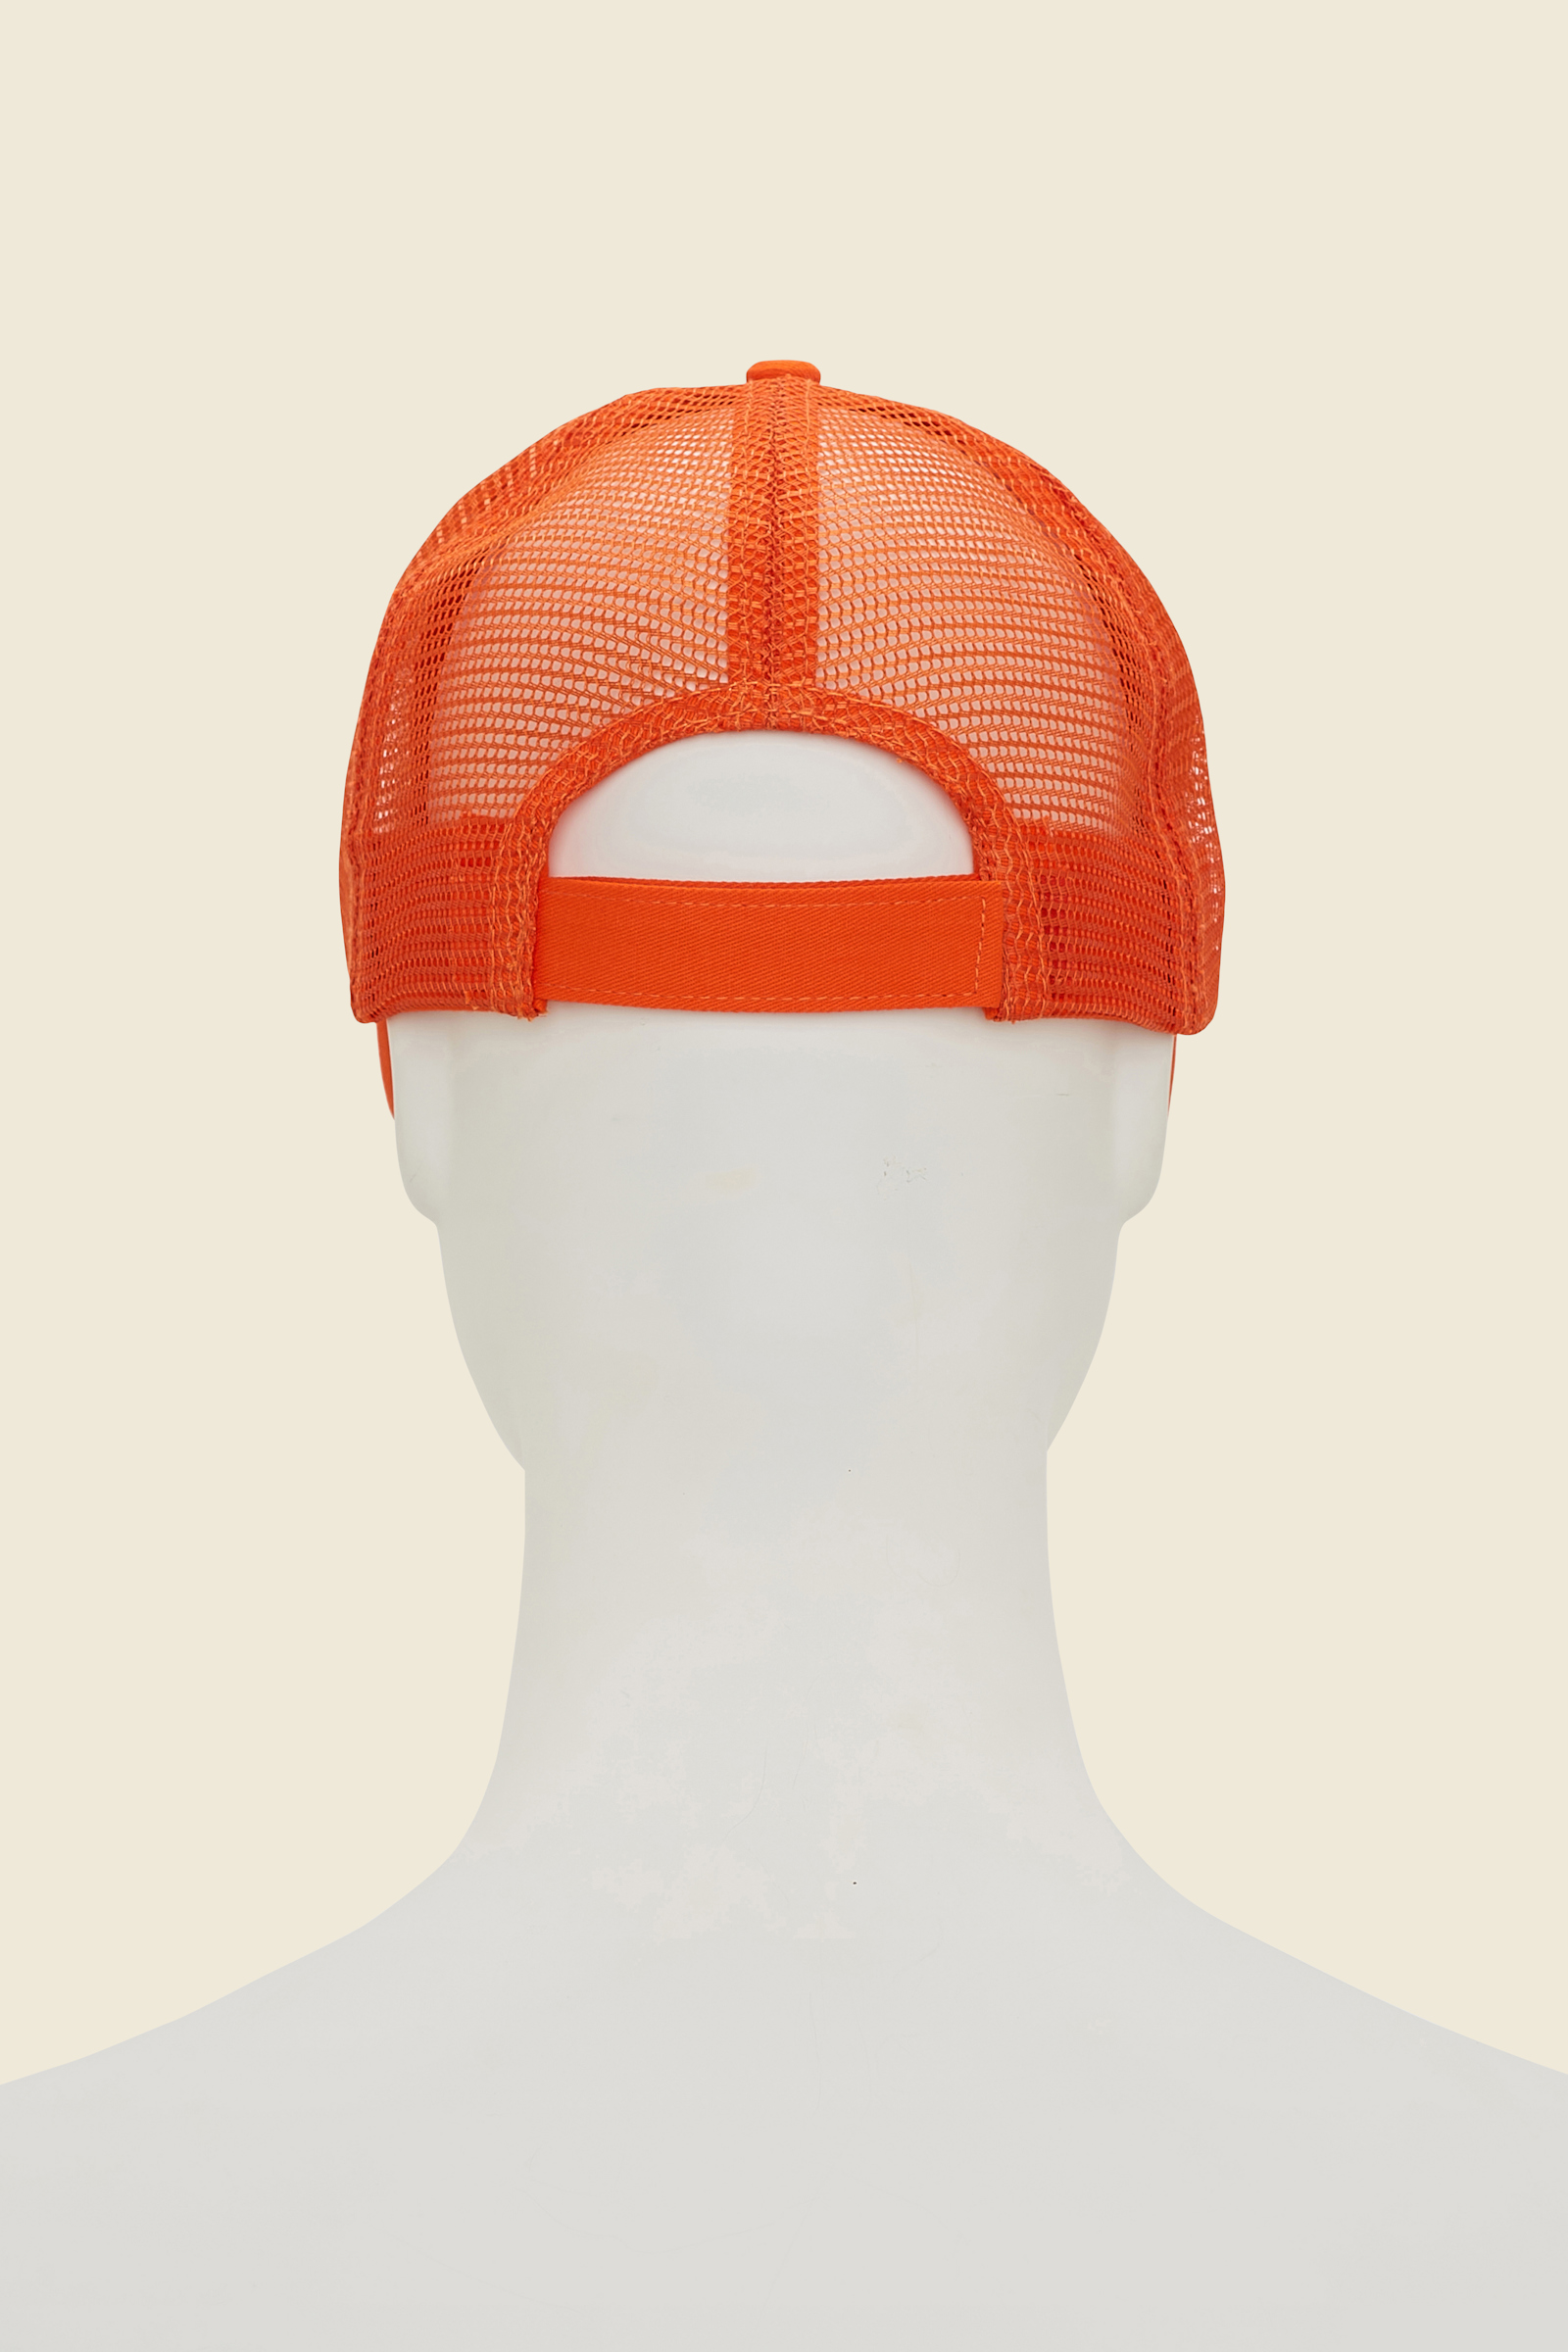 CHIYC baseball cap